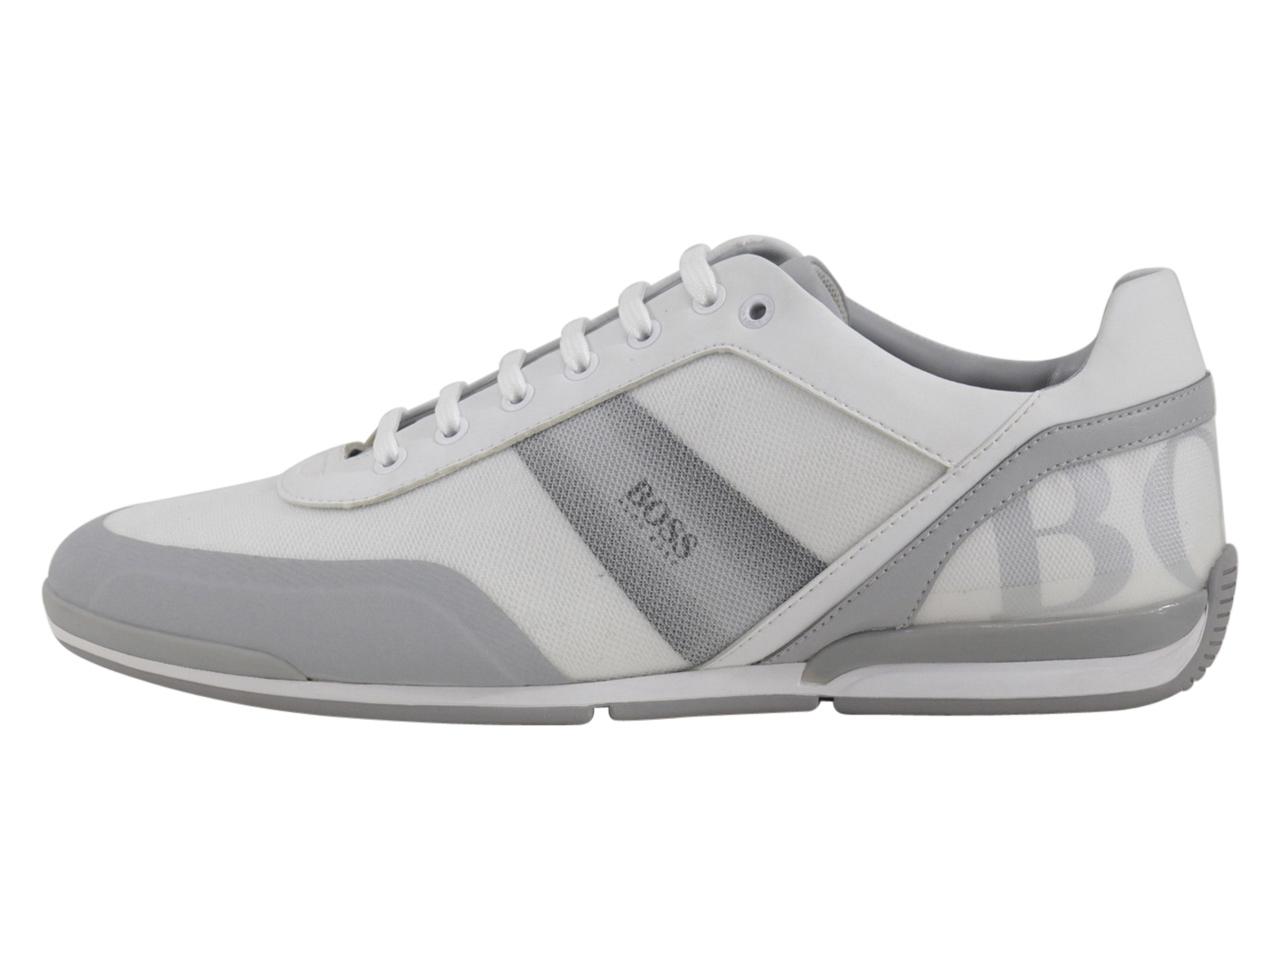 Hugo Boss Men's Saturn White Memory Foam Low-Top Sneakers Shoes | eBay